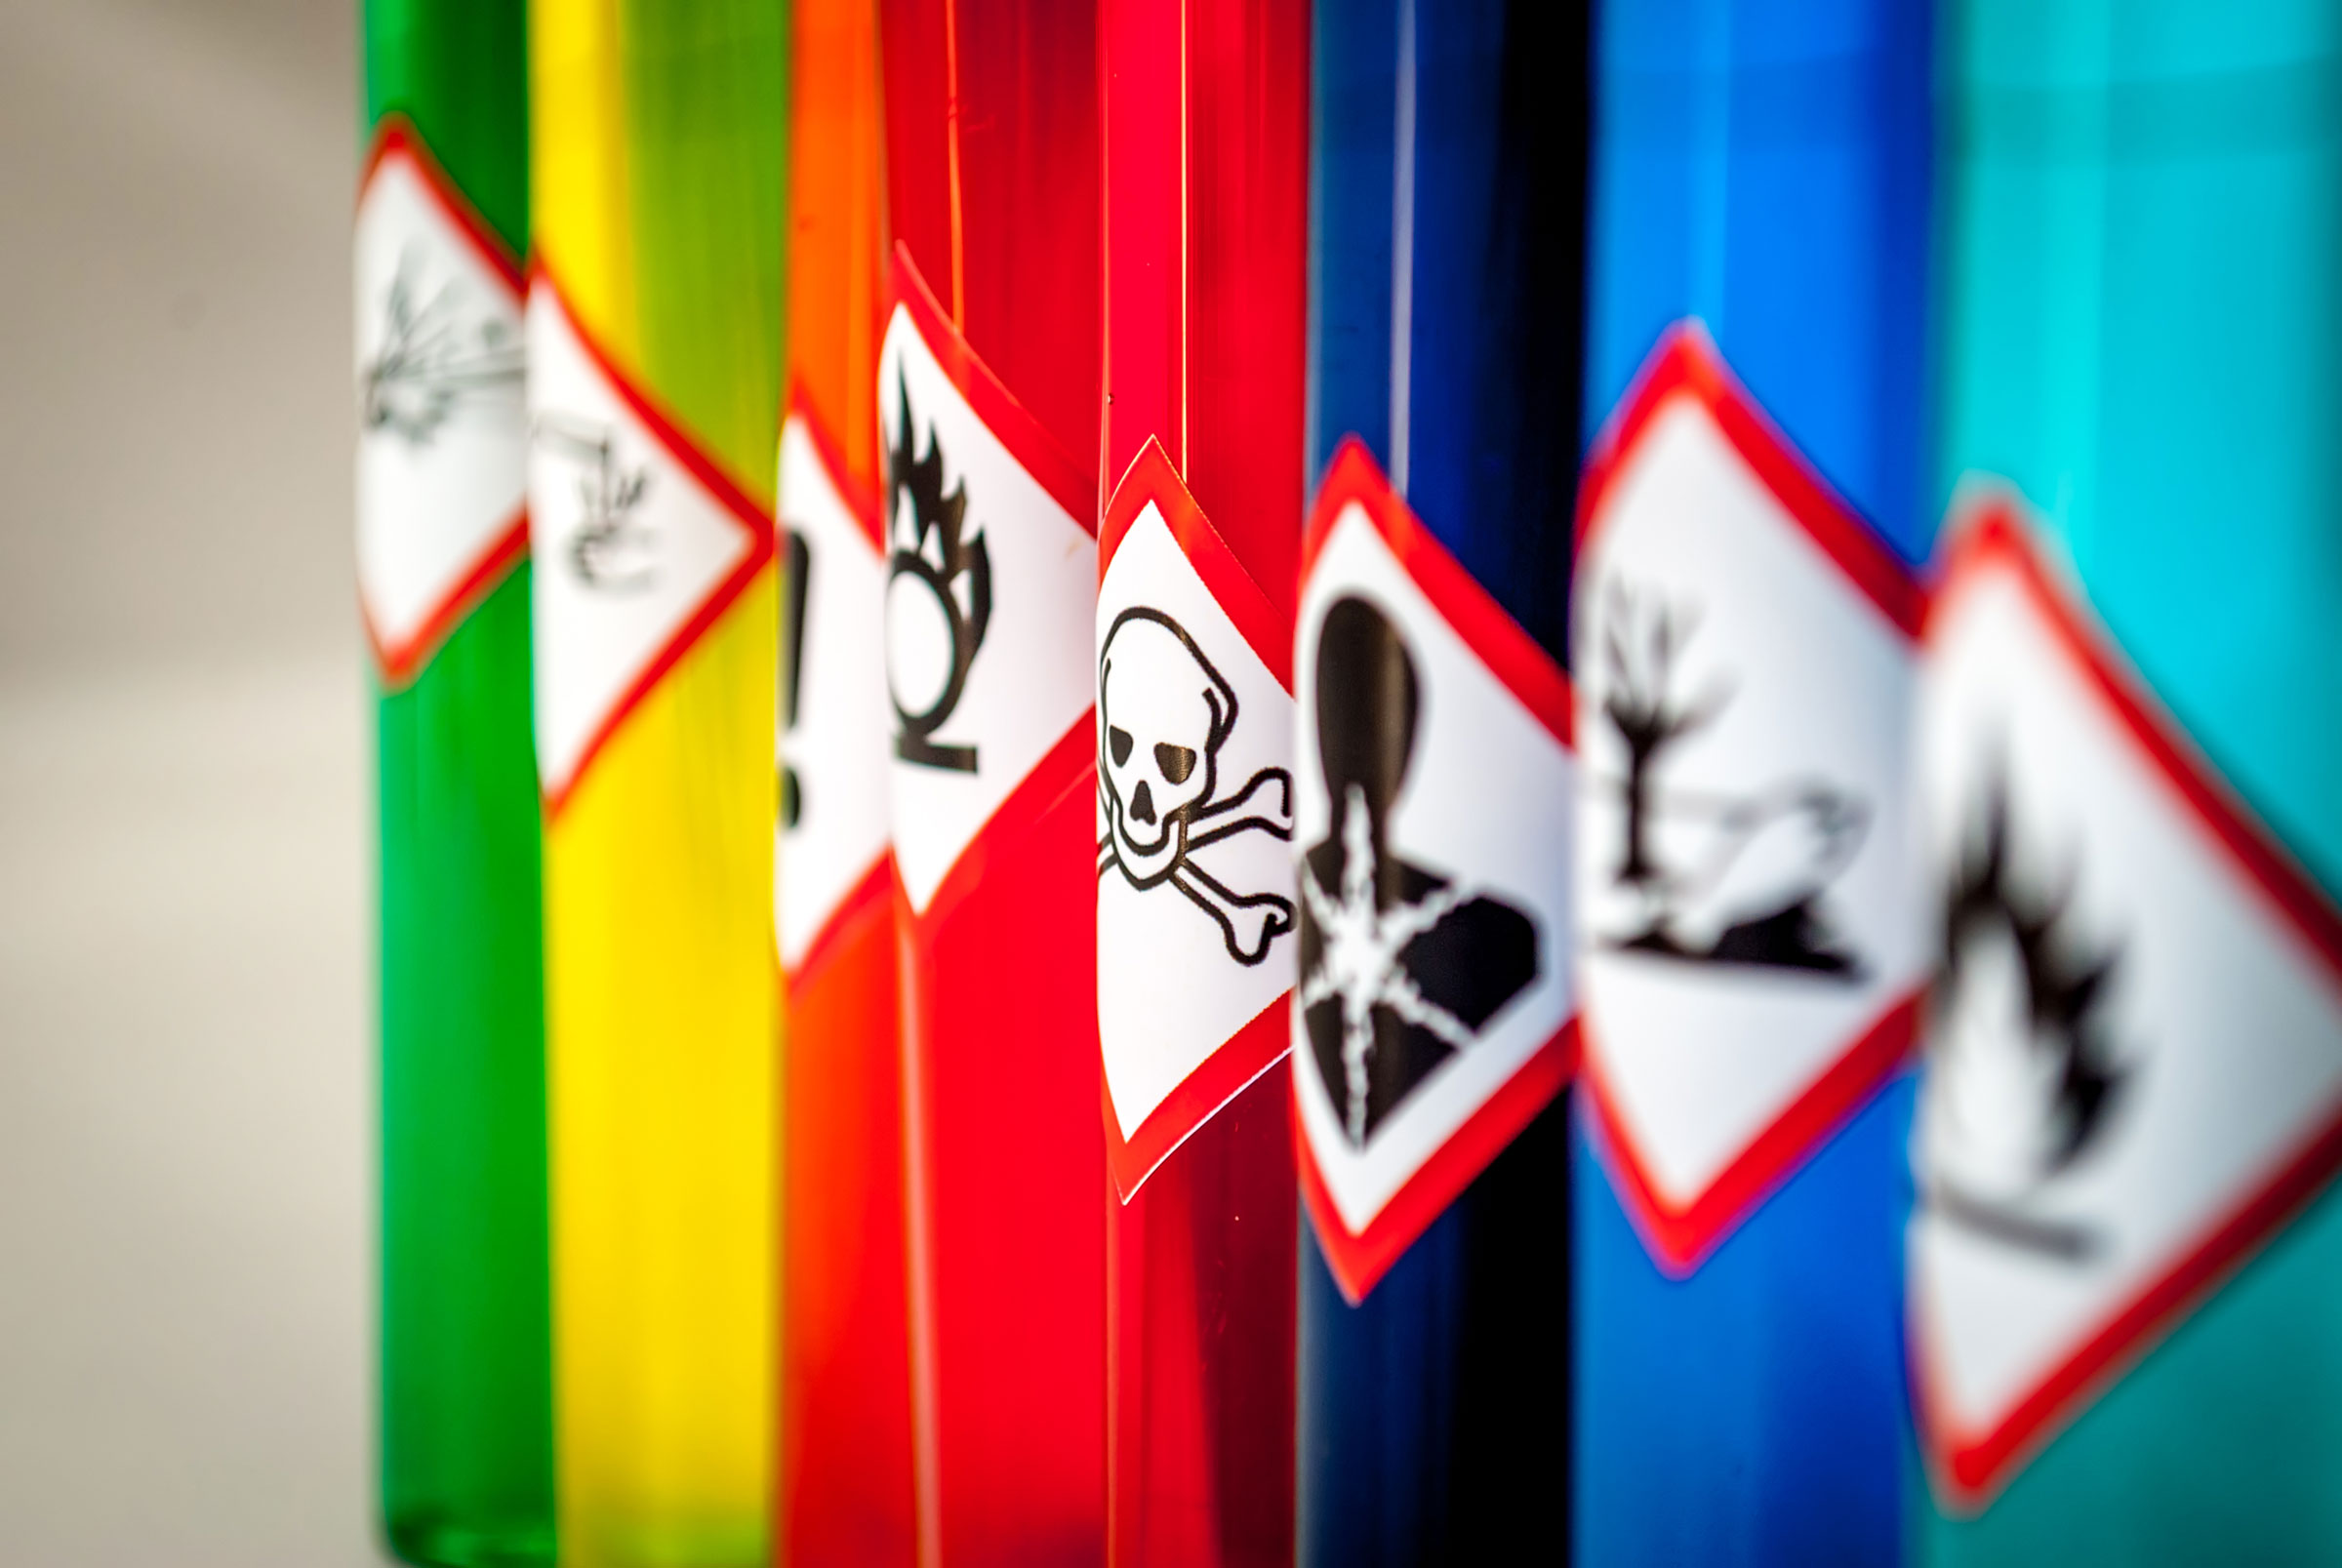 Hazardous logos and signs